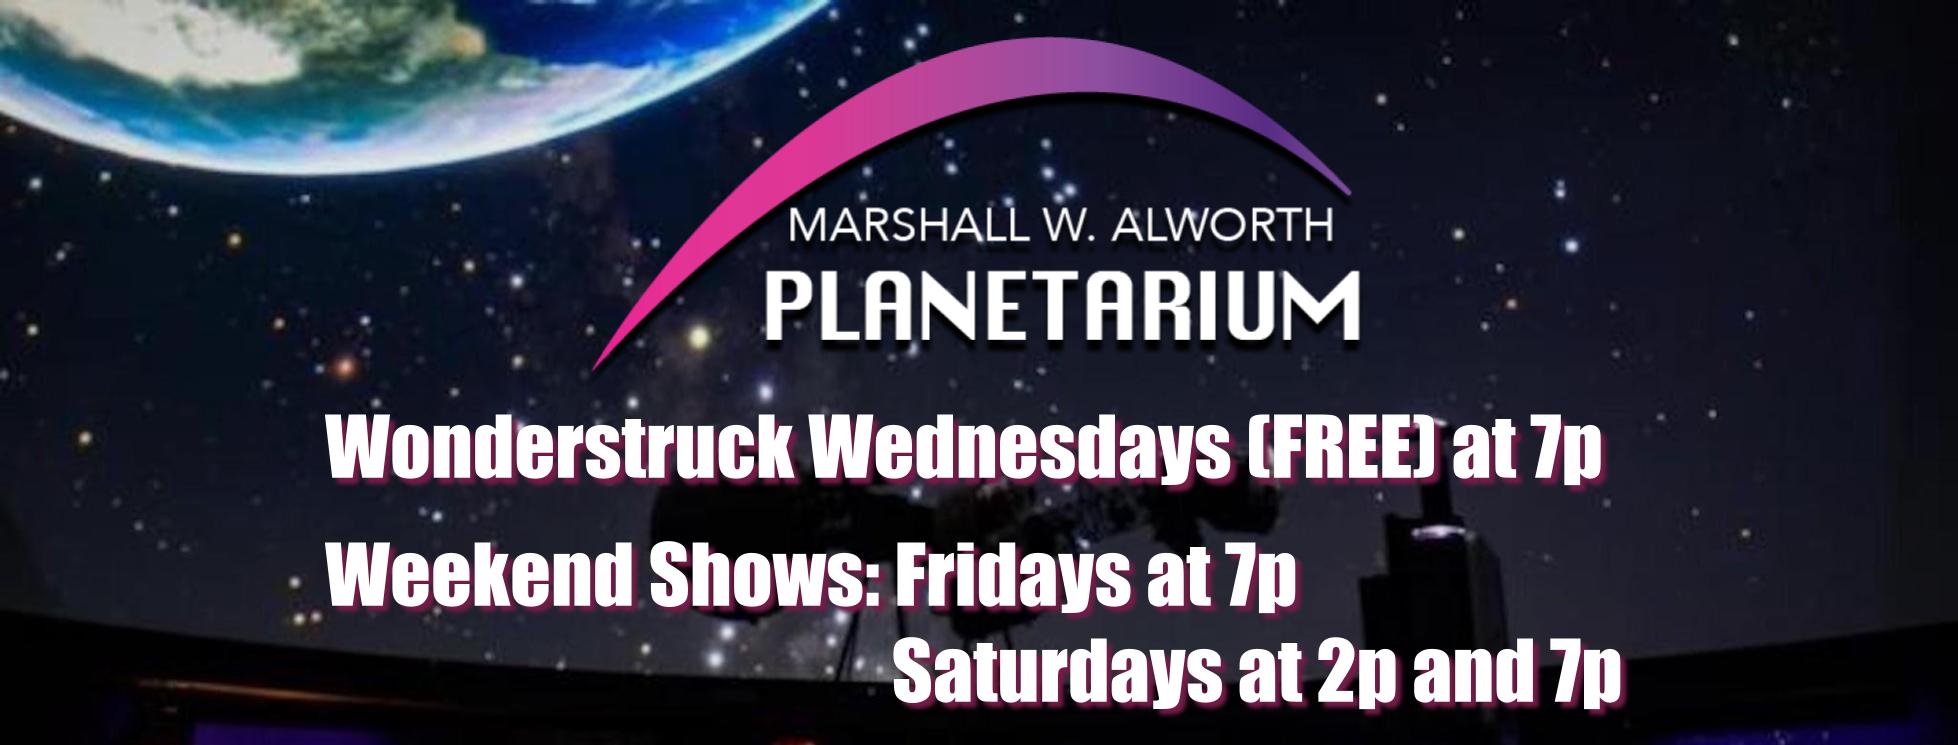 weekly show schedule